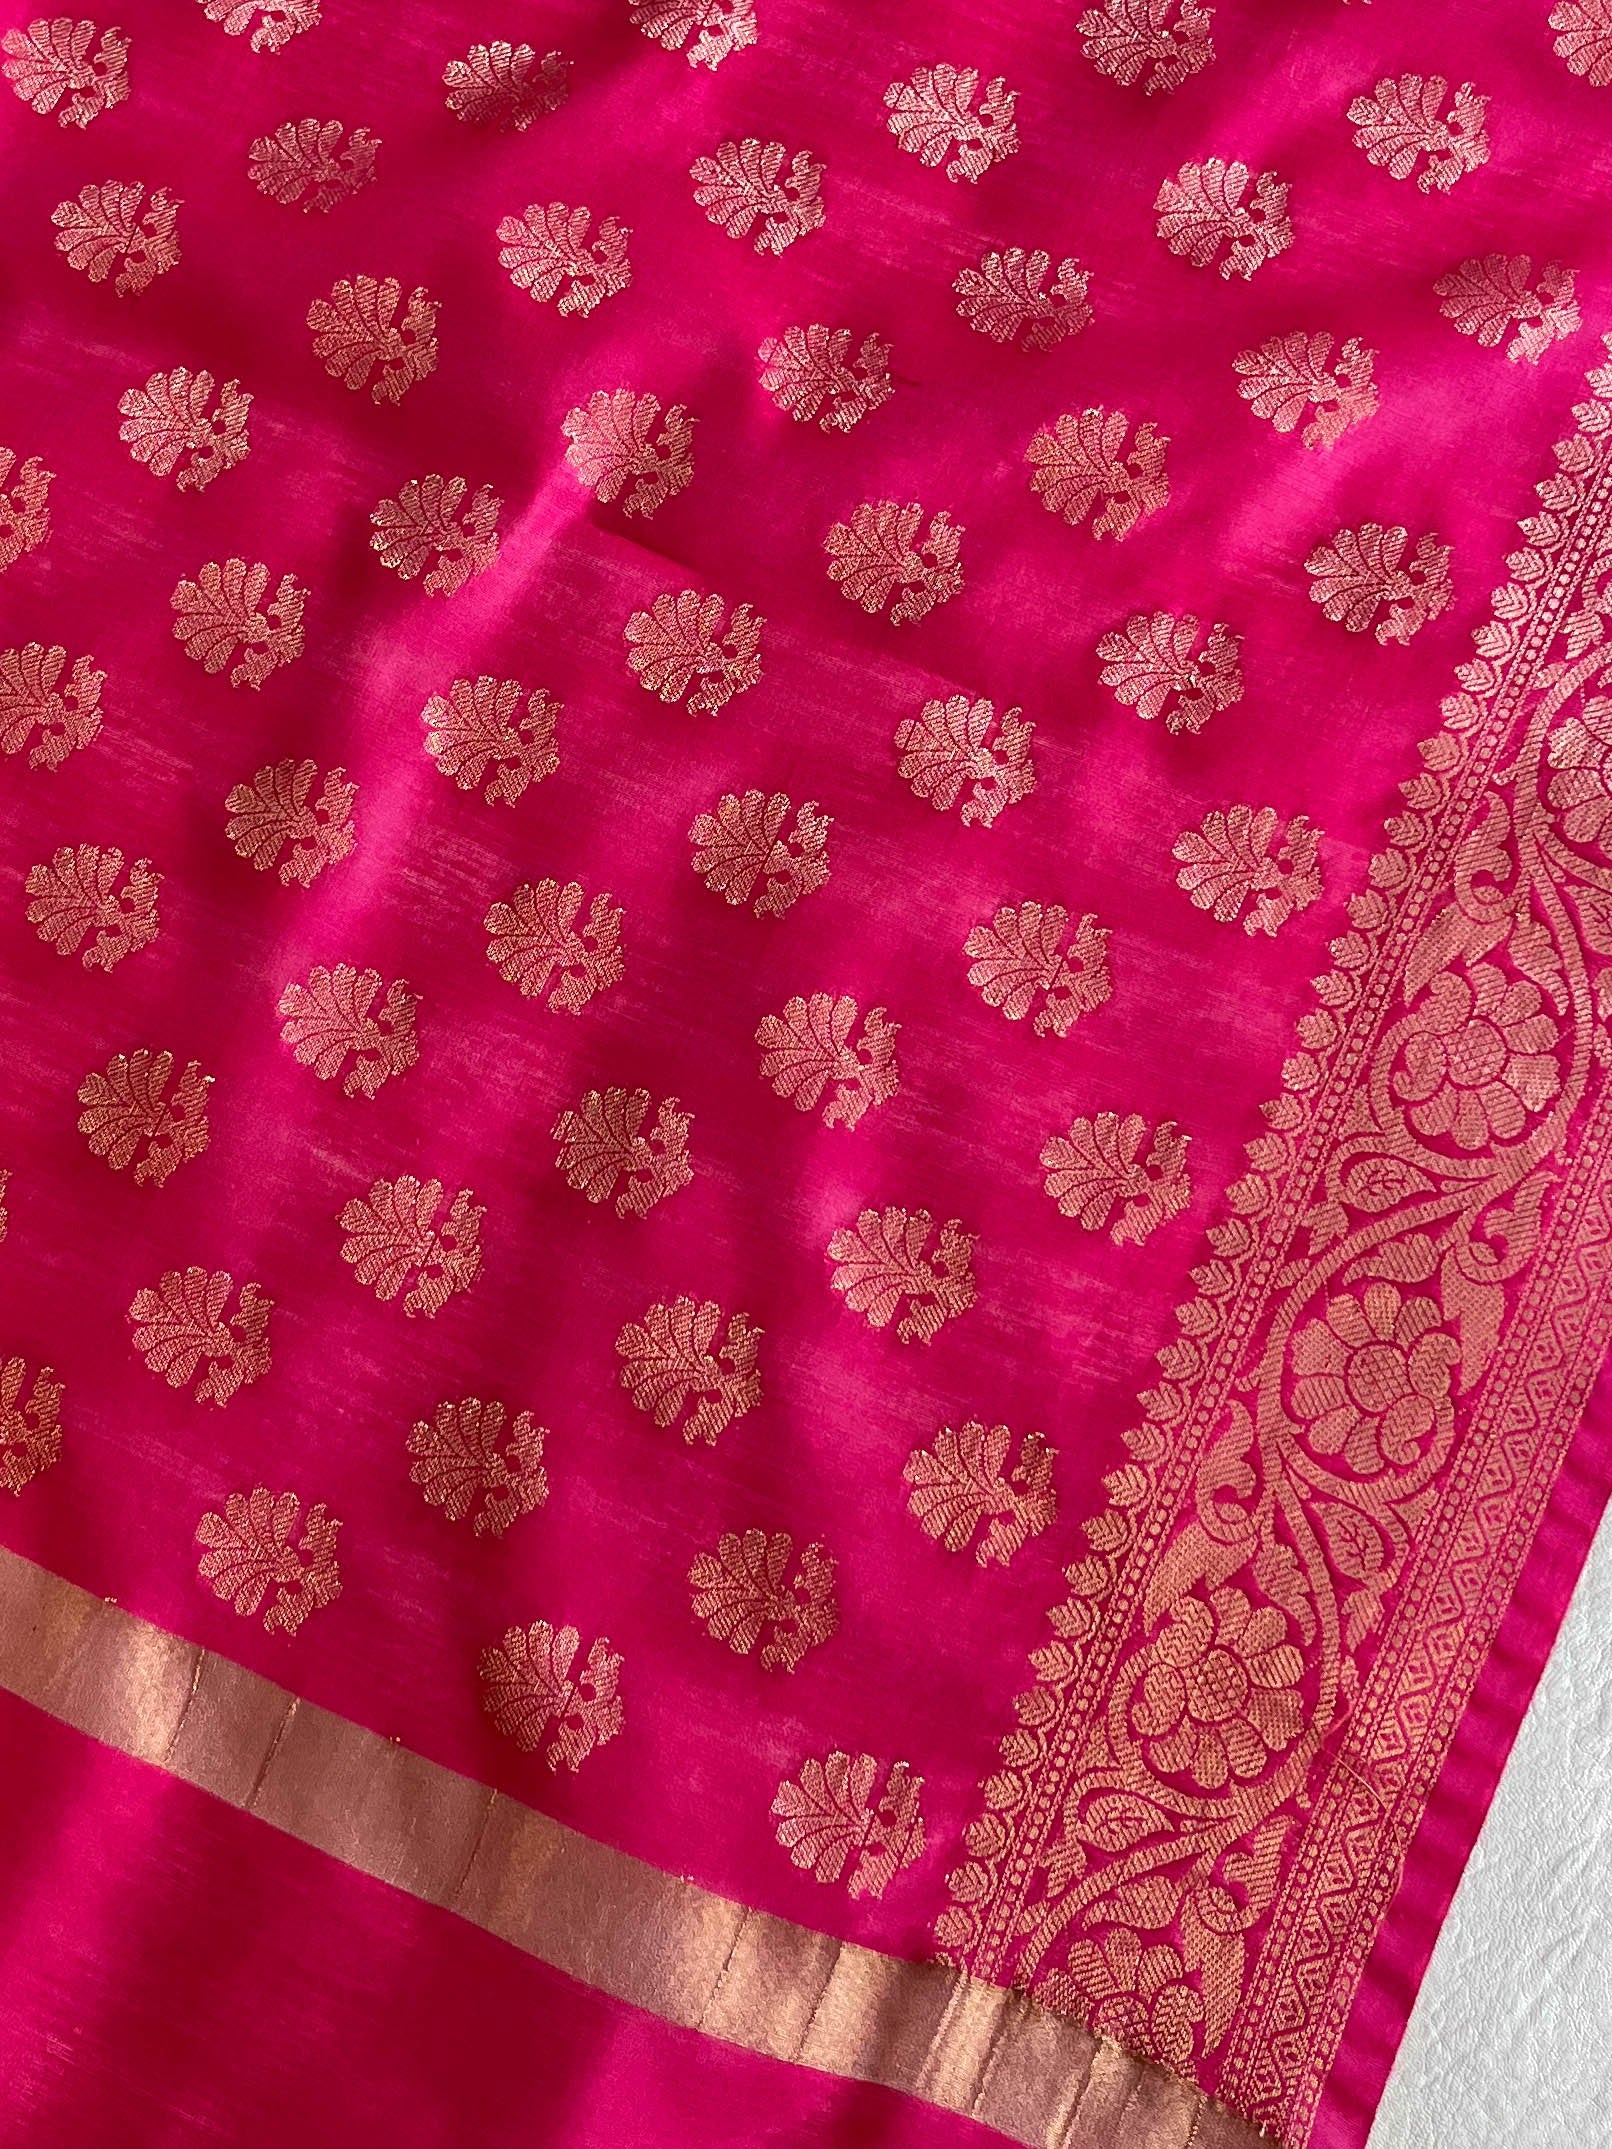 Banarasee Chanderi Cotton Salwar Kameez Fabric With Antique Zari & Contrast Dupatta-Brown & Pink